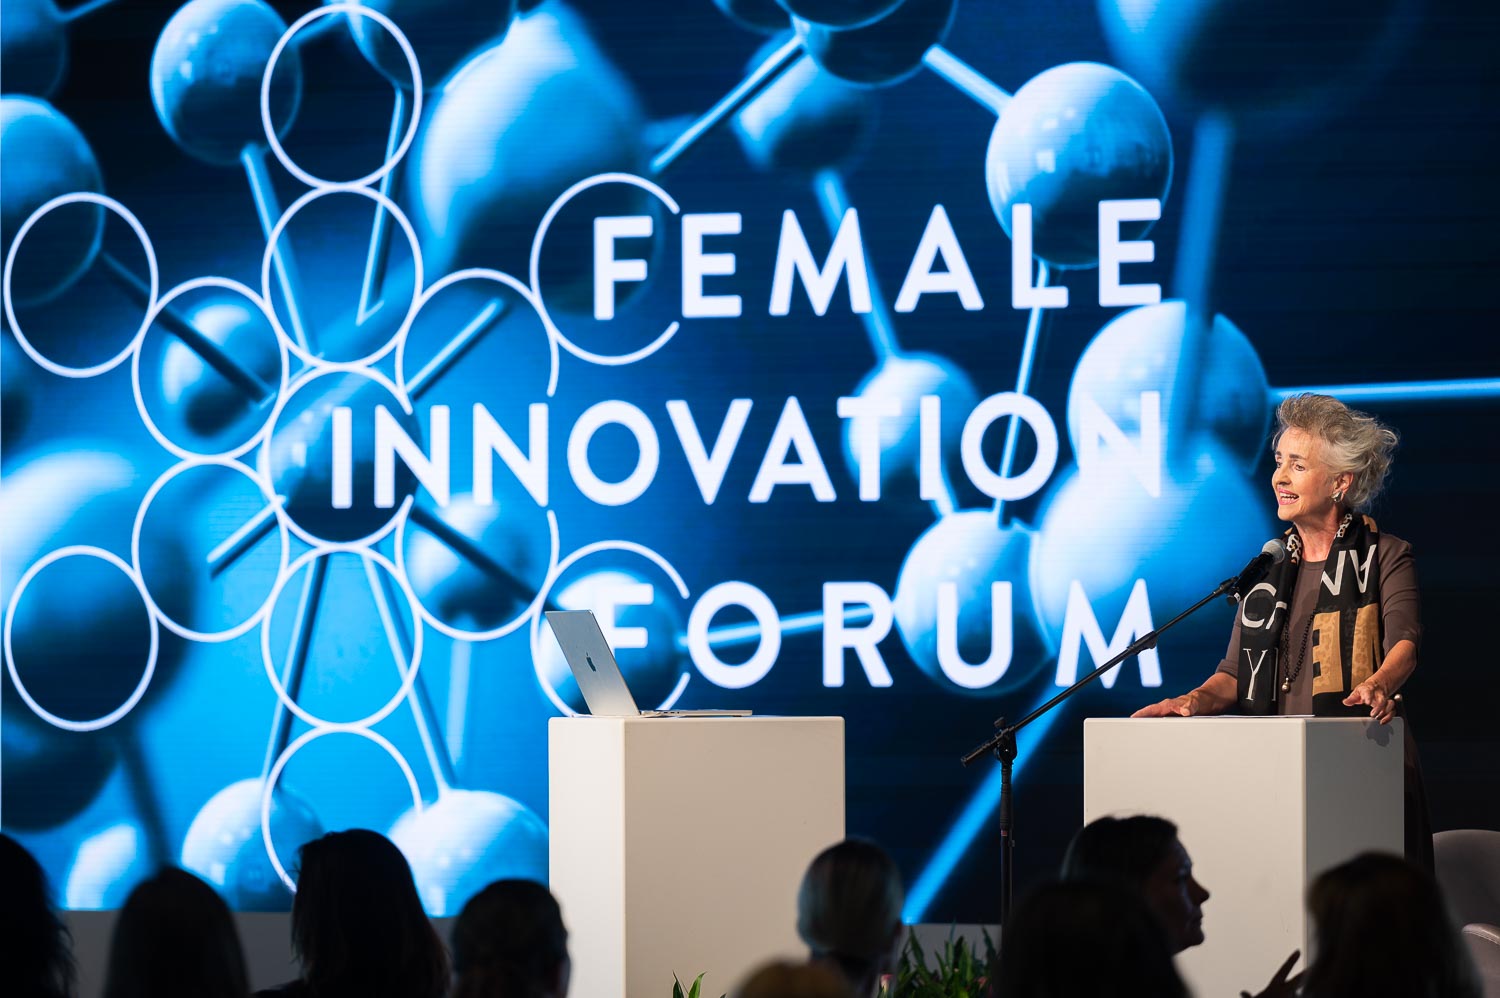 Female Innovation Forum 2023